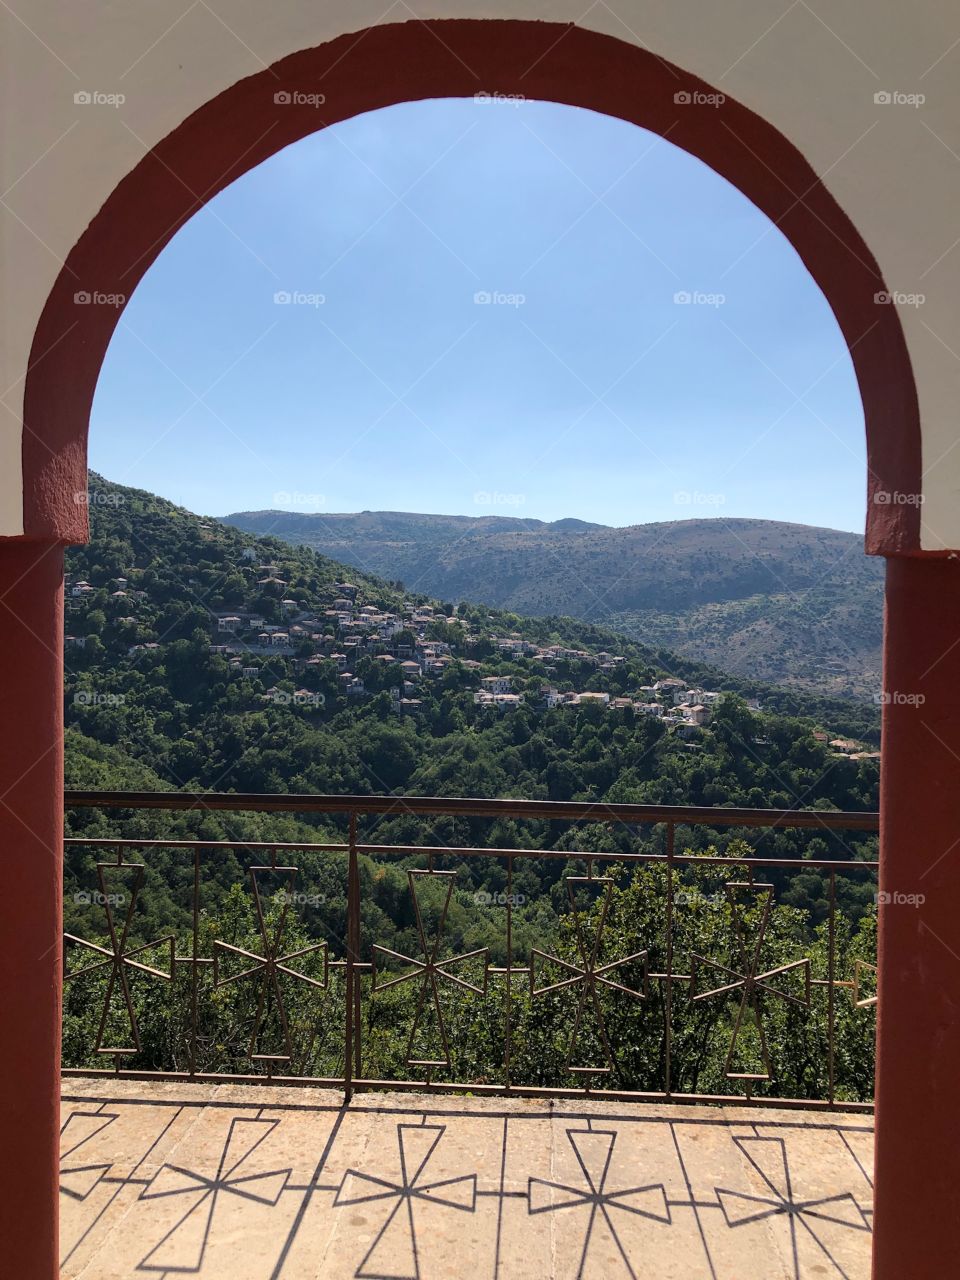 Window View from a monastery in Greece up in the Peloponnese region near Tripoli